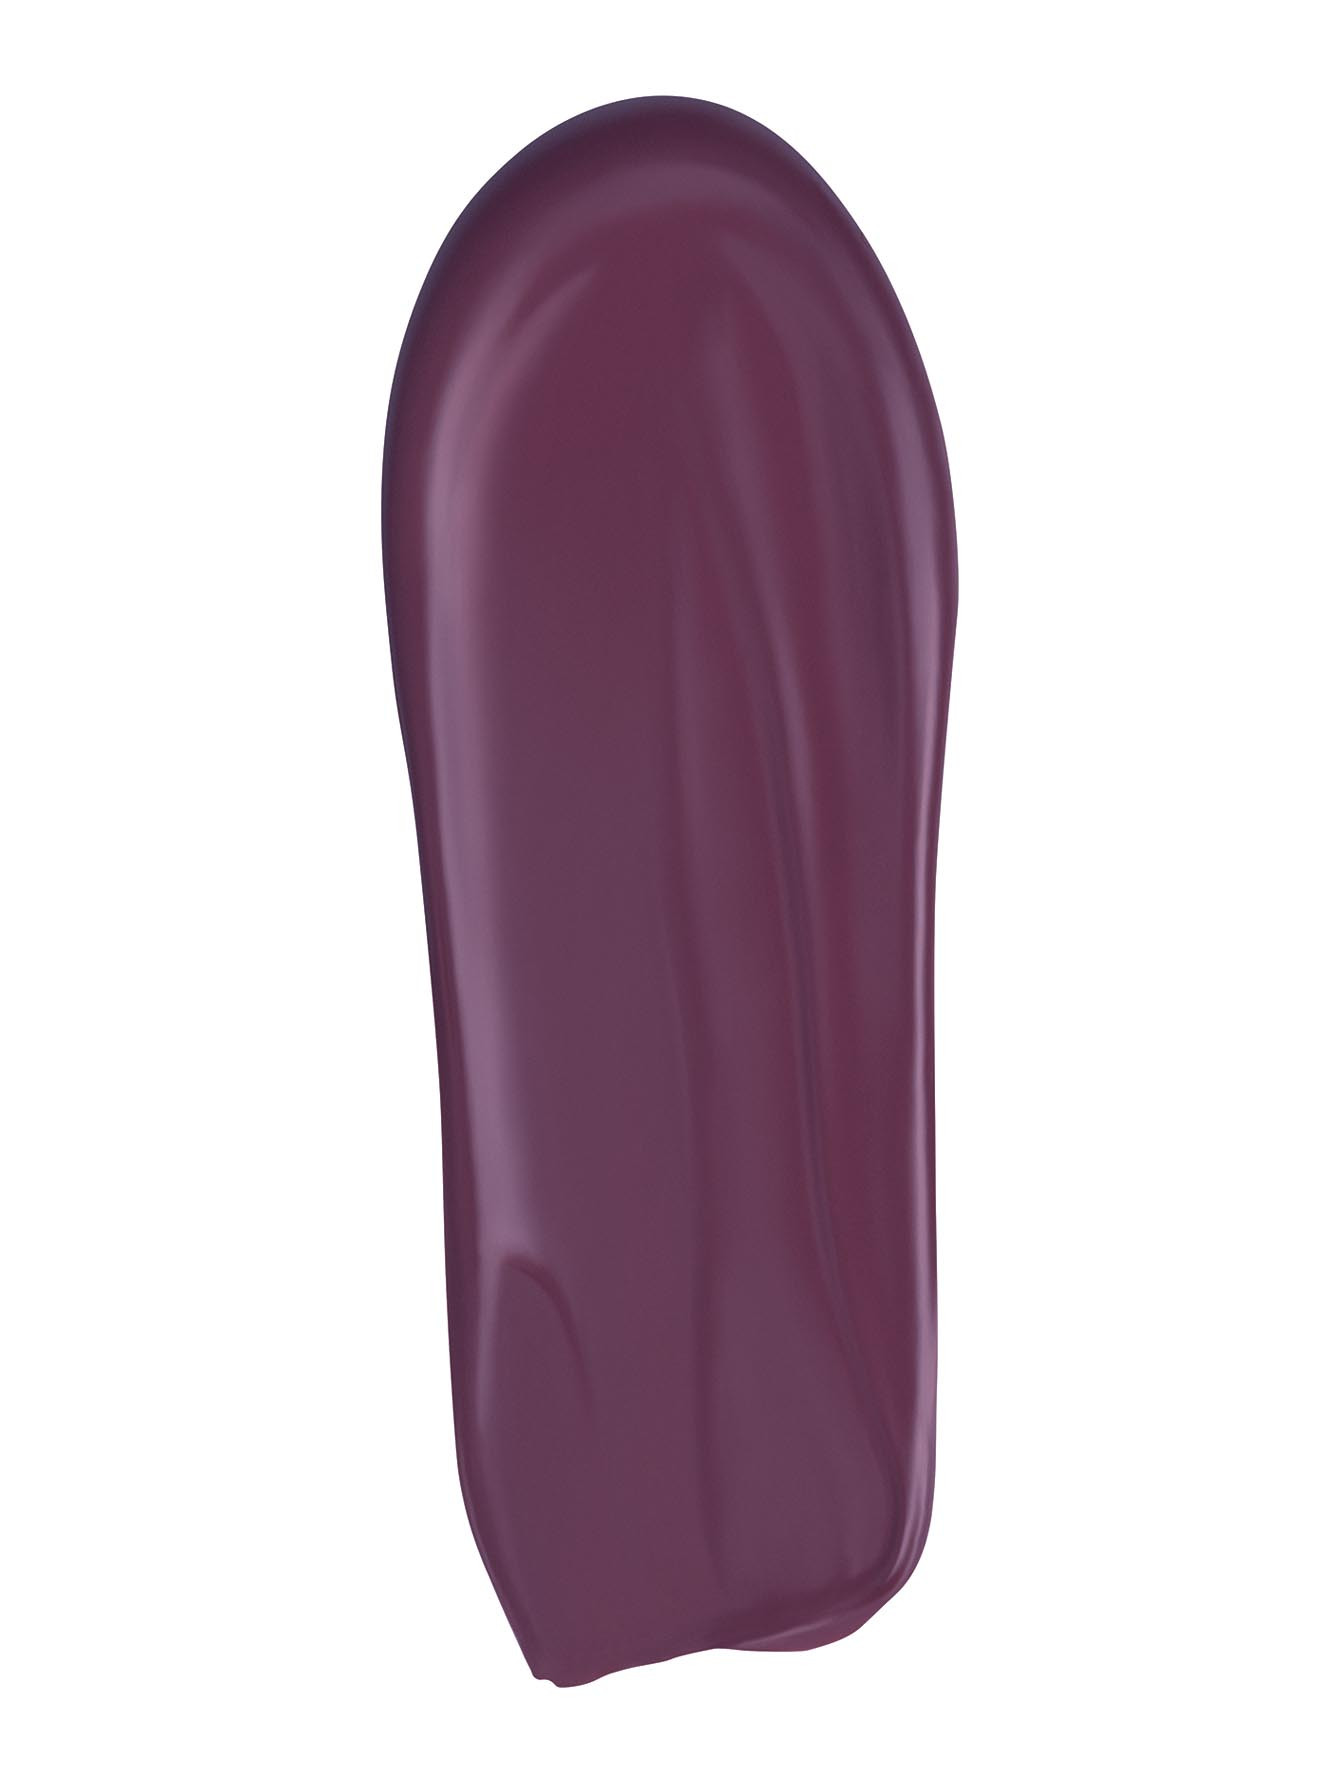 Матовая губная помада Lip-Expert Matte Liquid Lipstick, 15 Velvet Orchid, 4 мл - Обтравка1